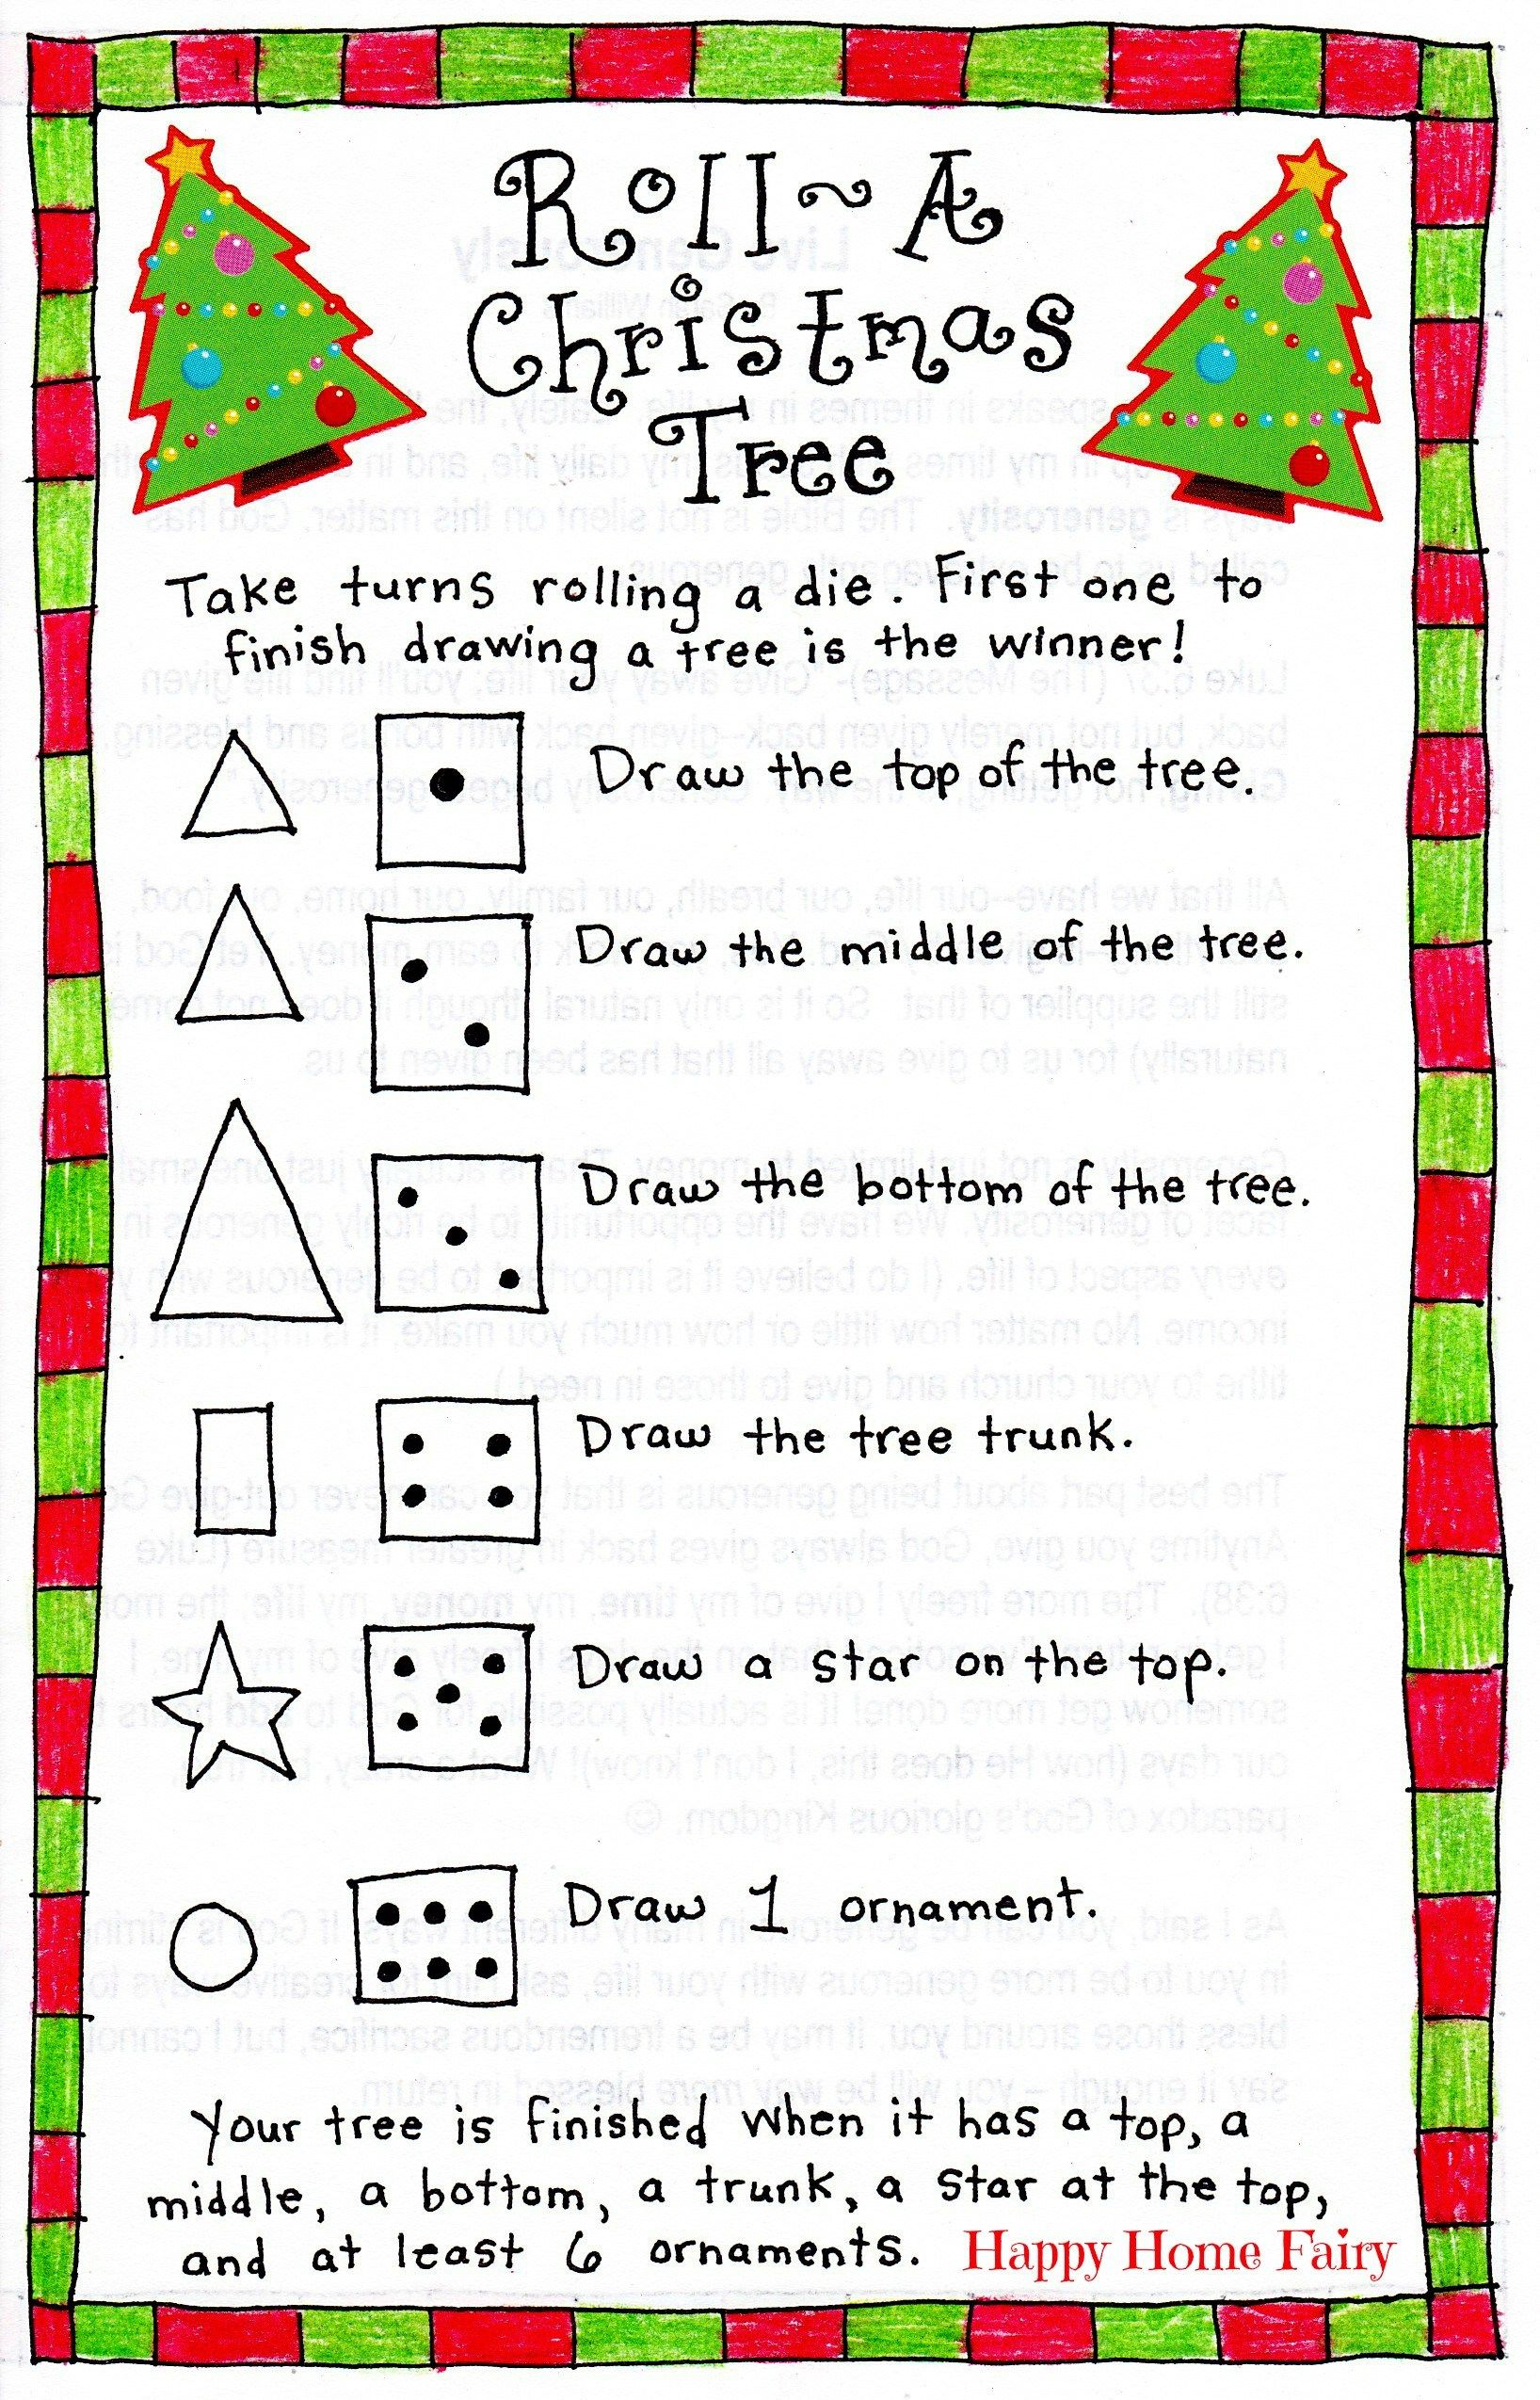 Roll-A-Christmas-Tree Game – Free Printable! | Christmas | Pinterest - Free Printable Christmas Puzzles And Games